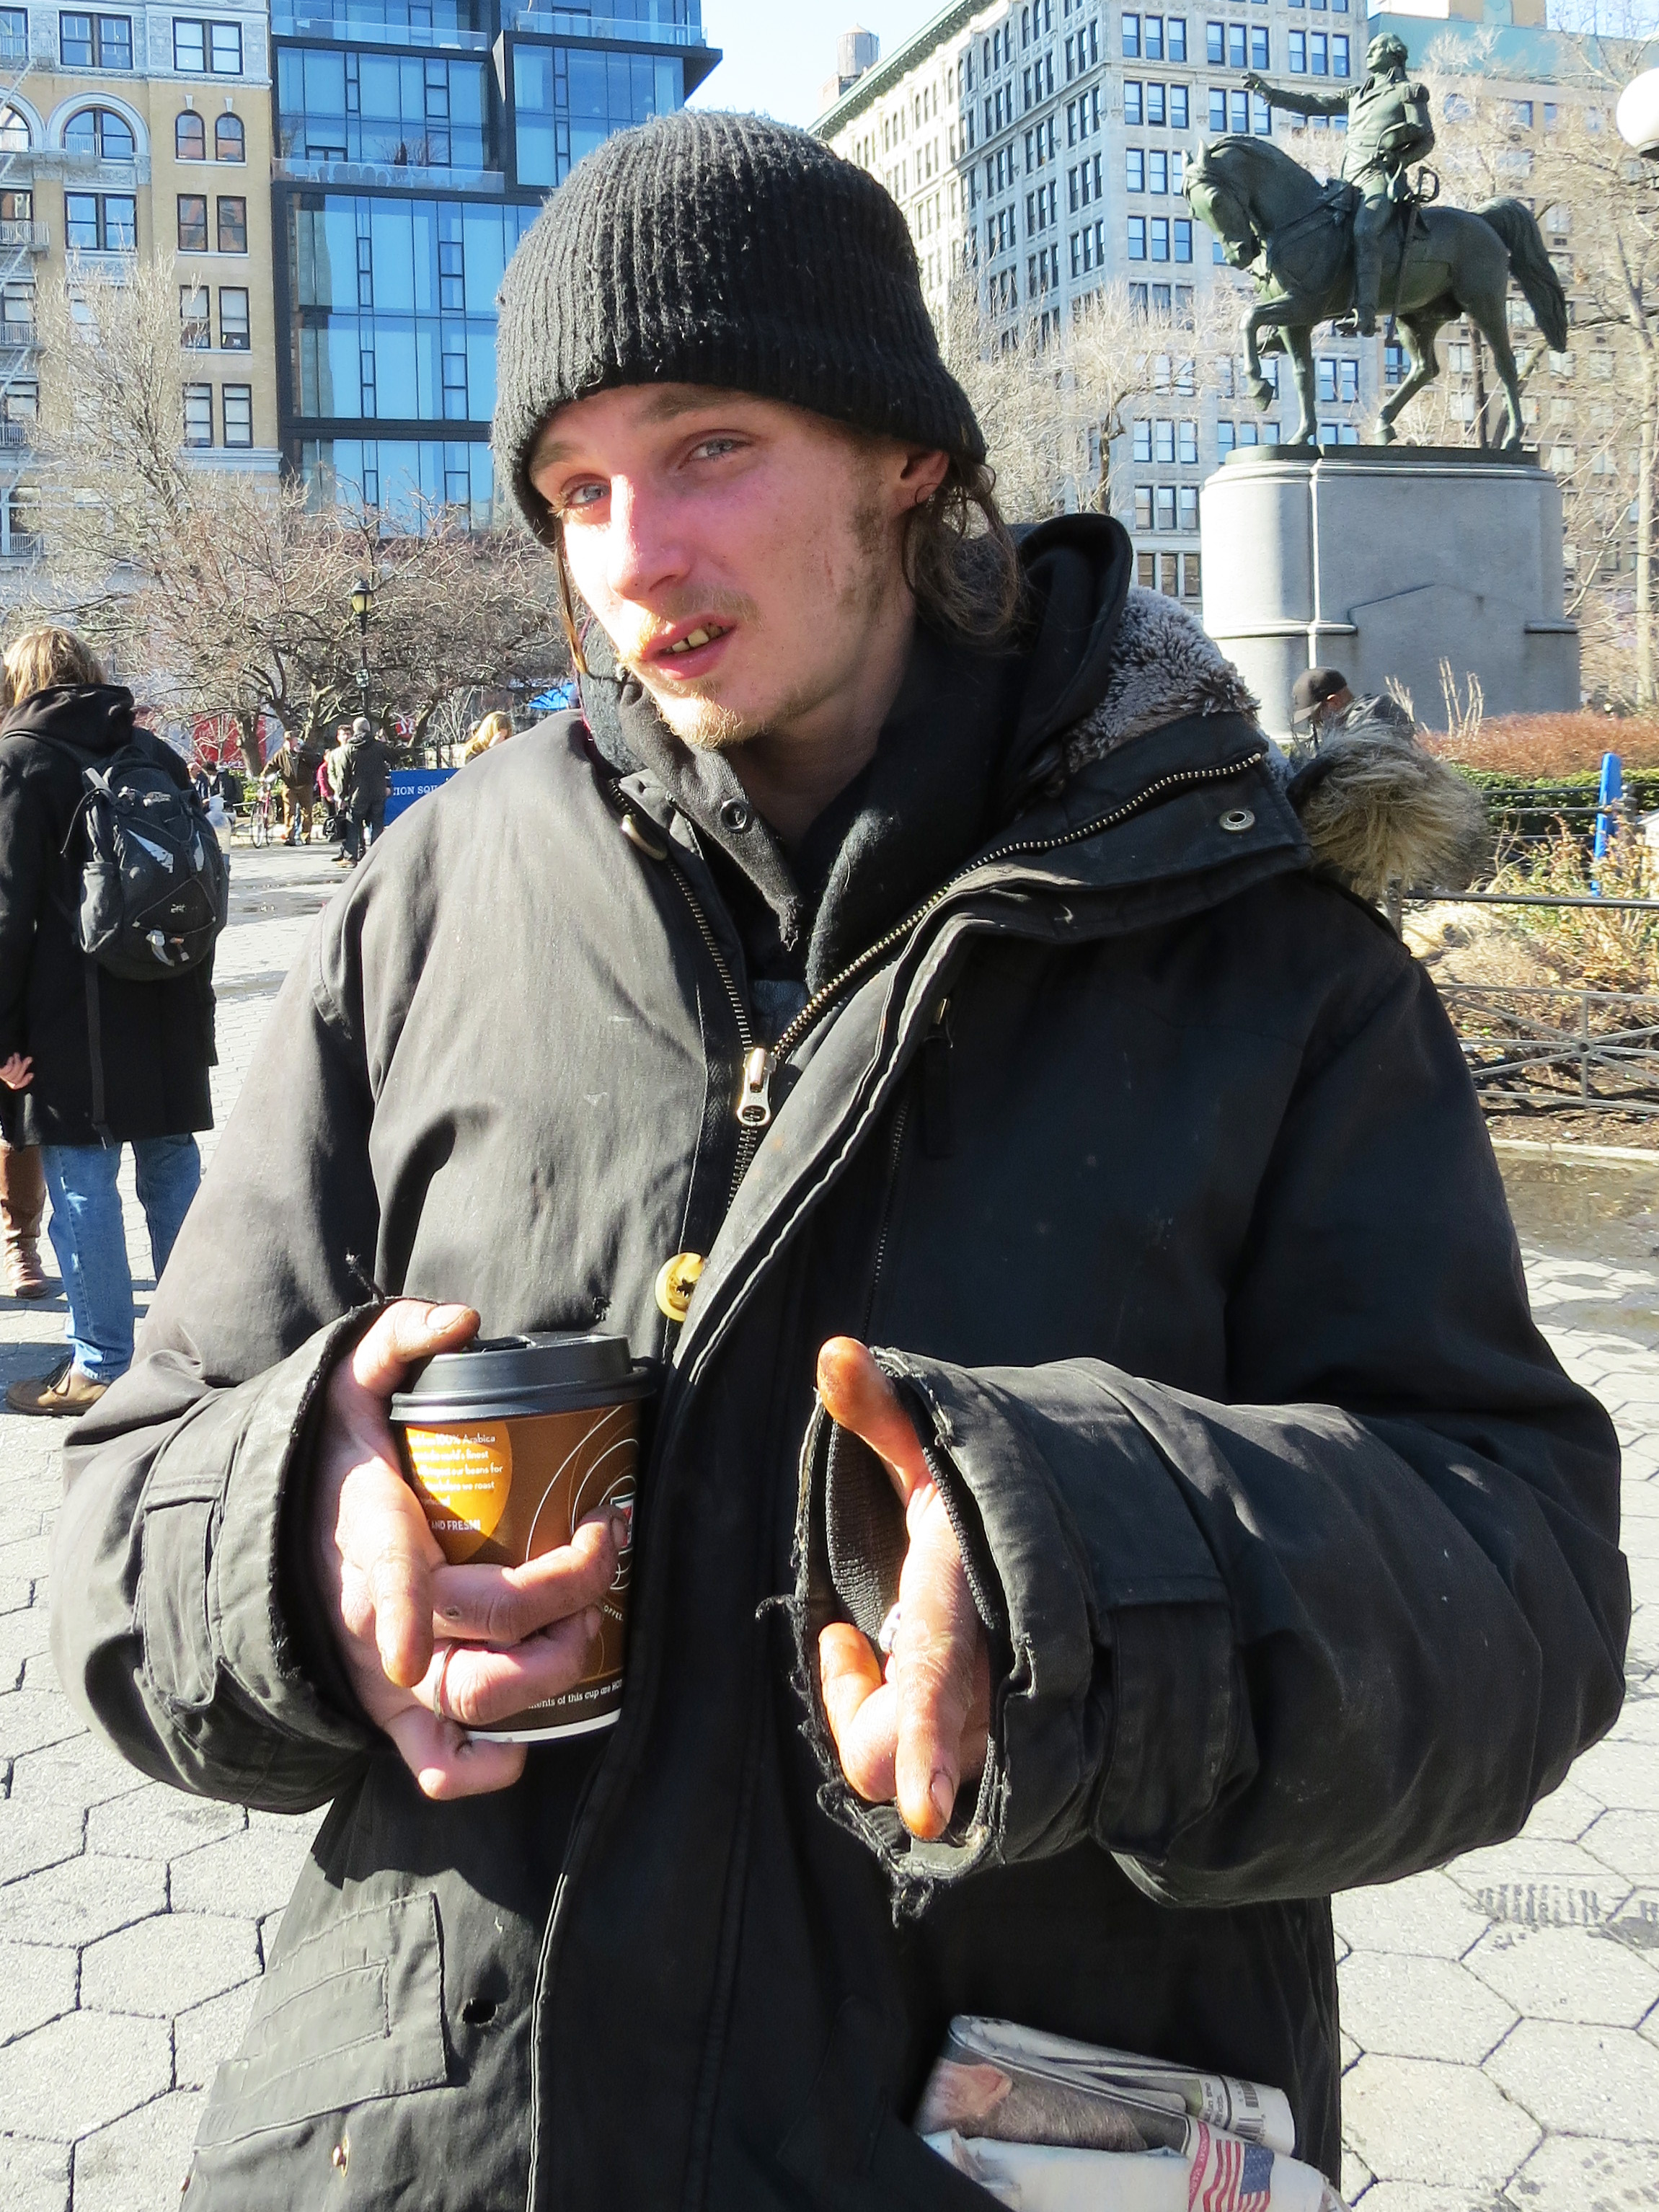 homeless junkie kid in winter coat